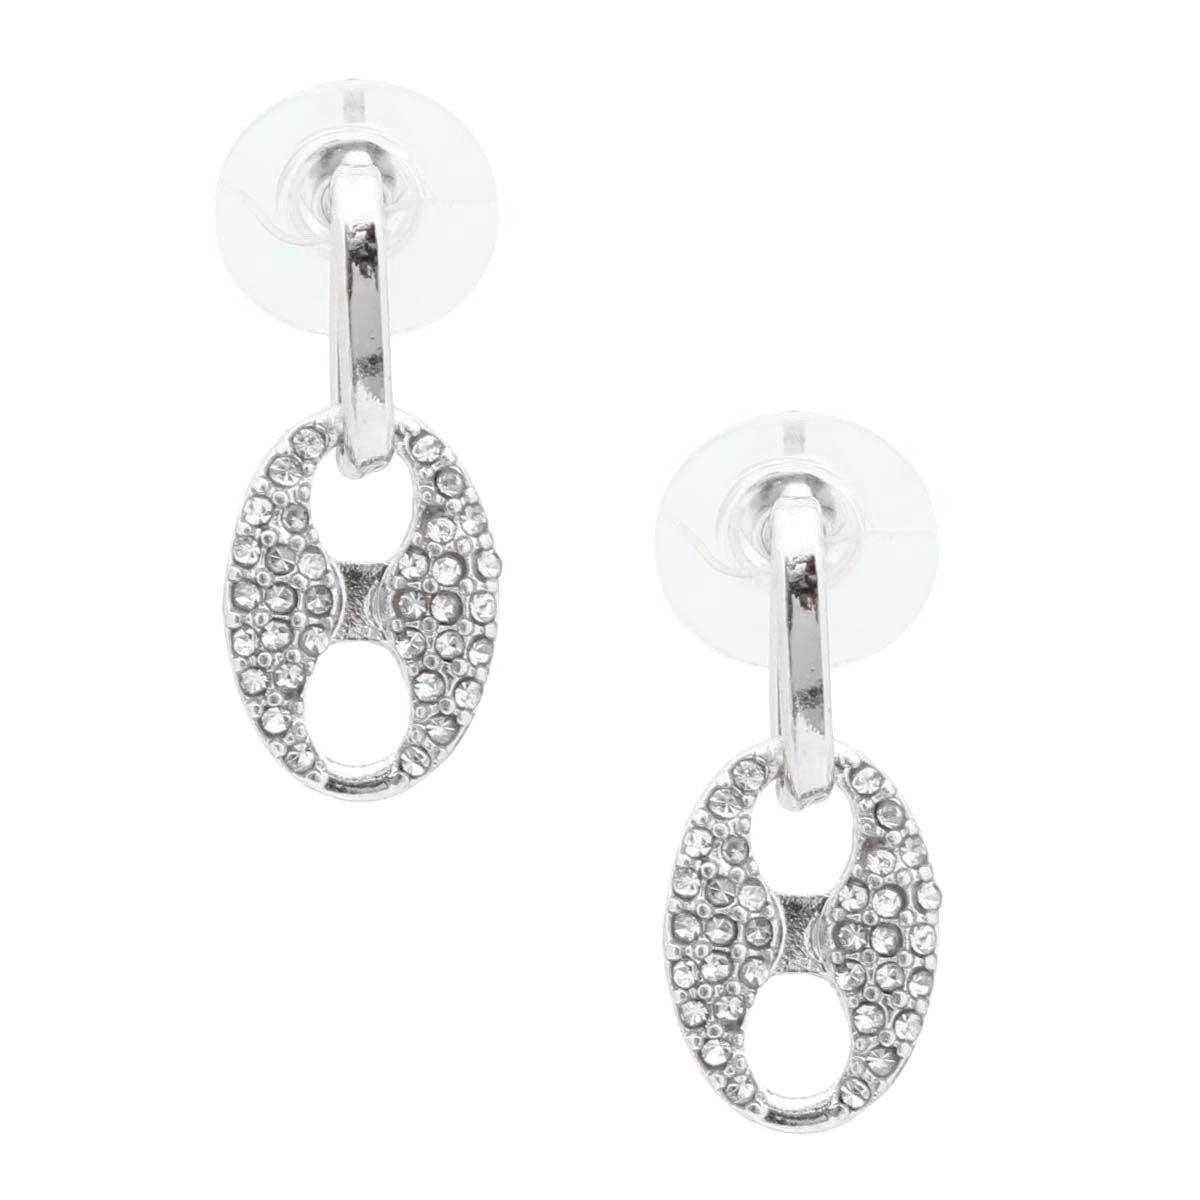 Get Elegant Rhodium Plated Matelot Earrings - Perfect Accessory